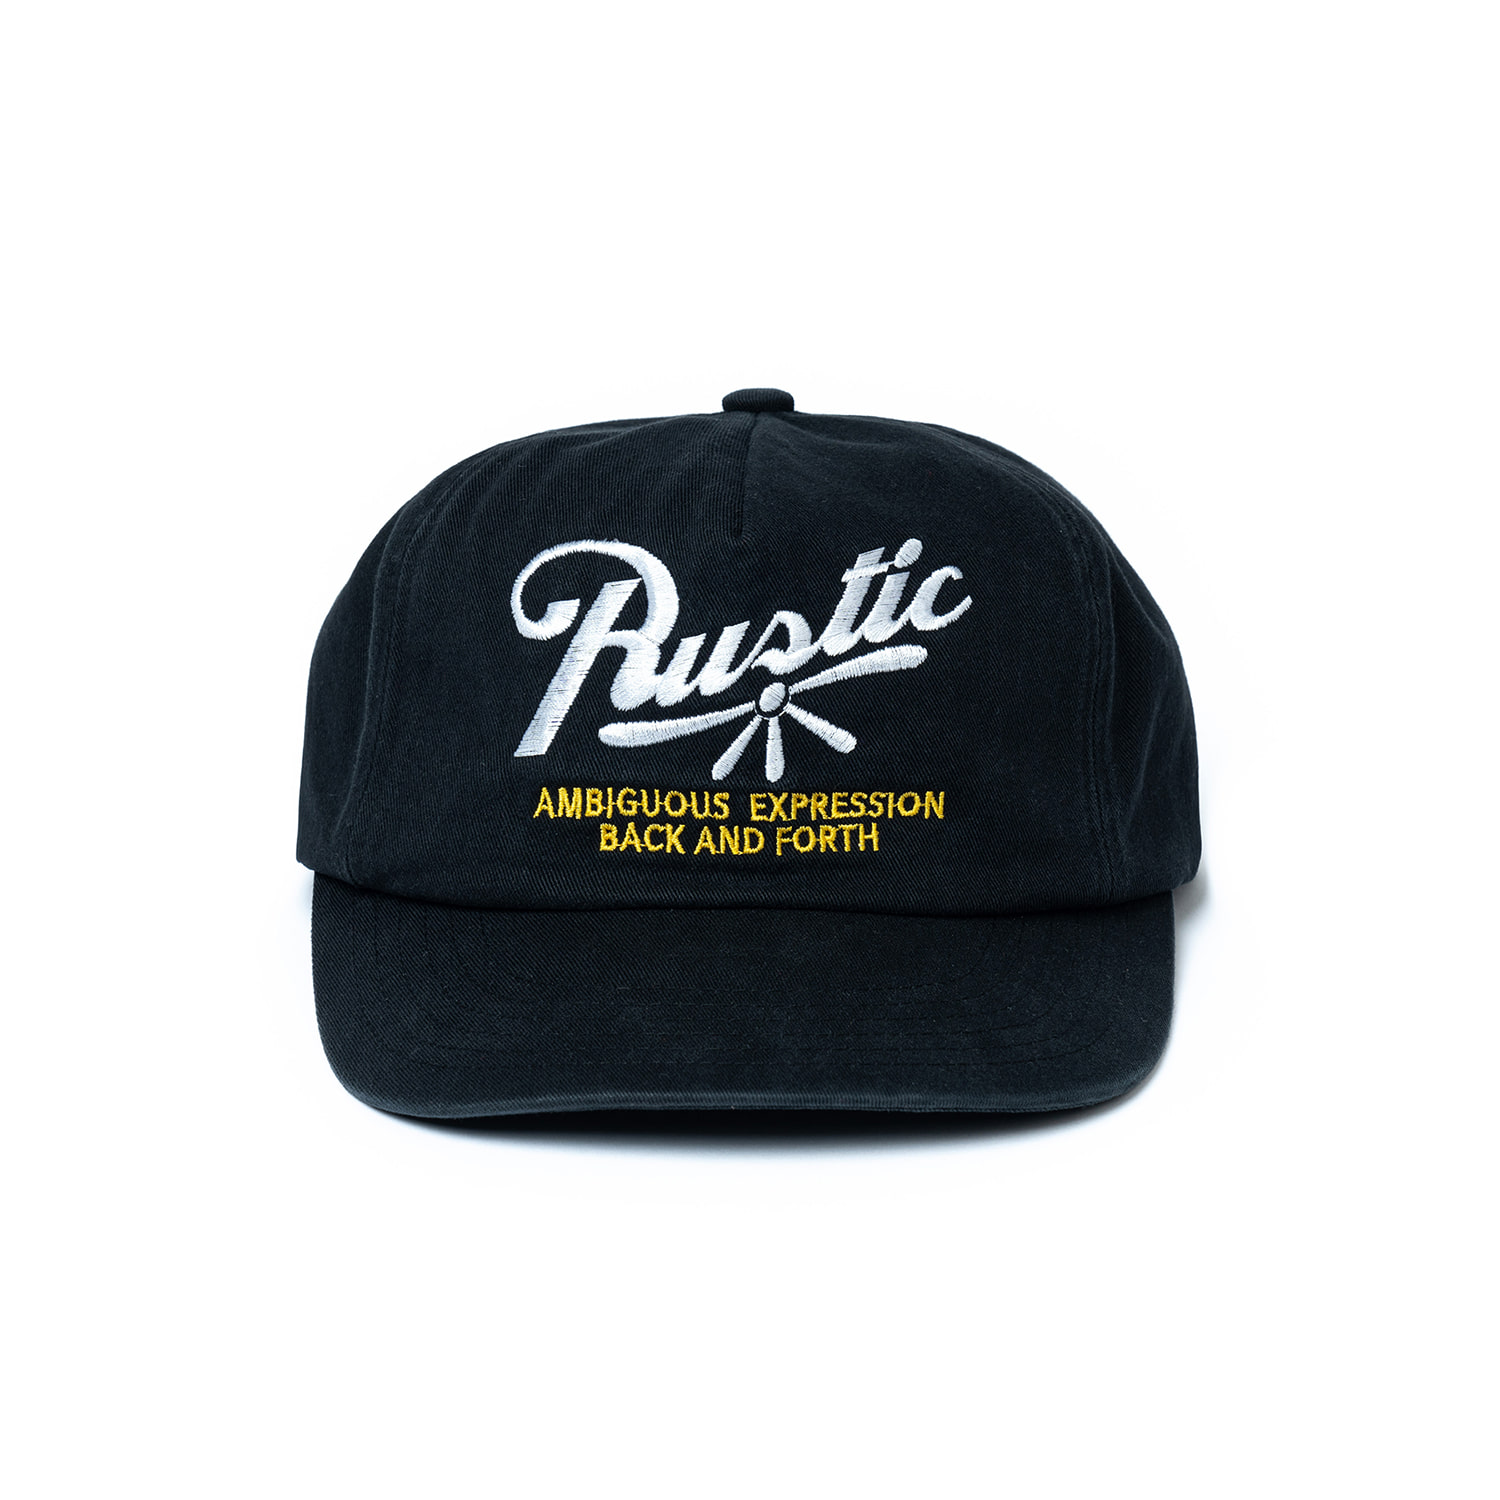 RUSTIC CAP[WASHED BLACK]